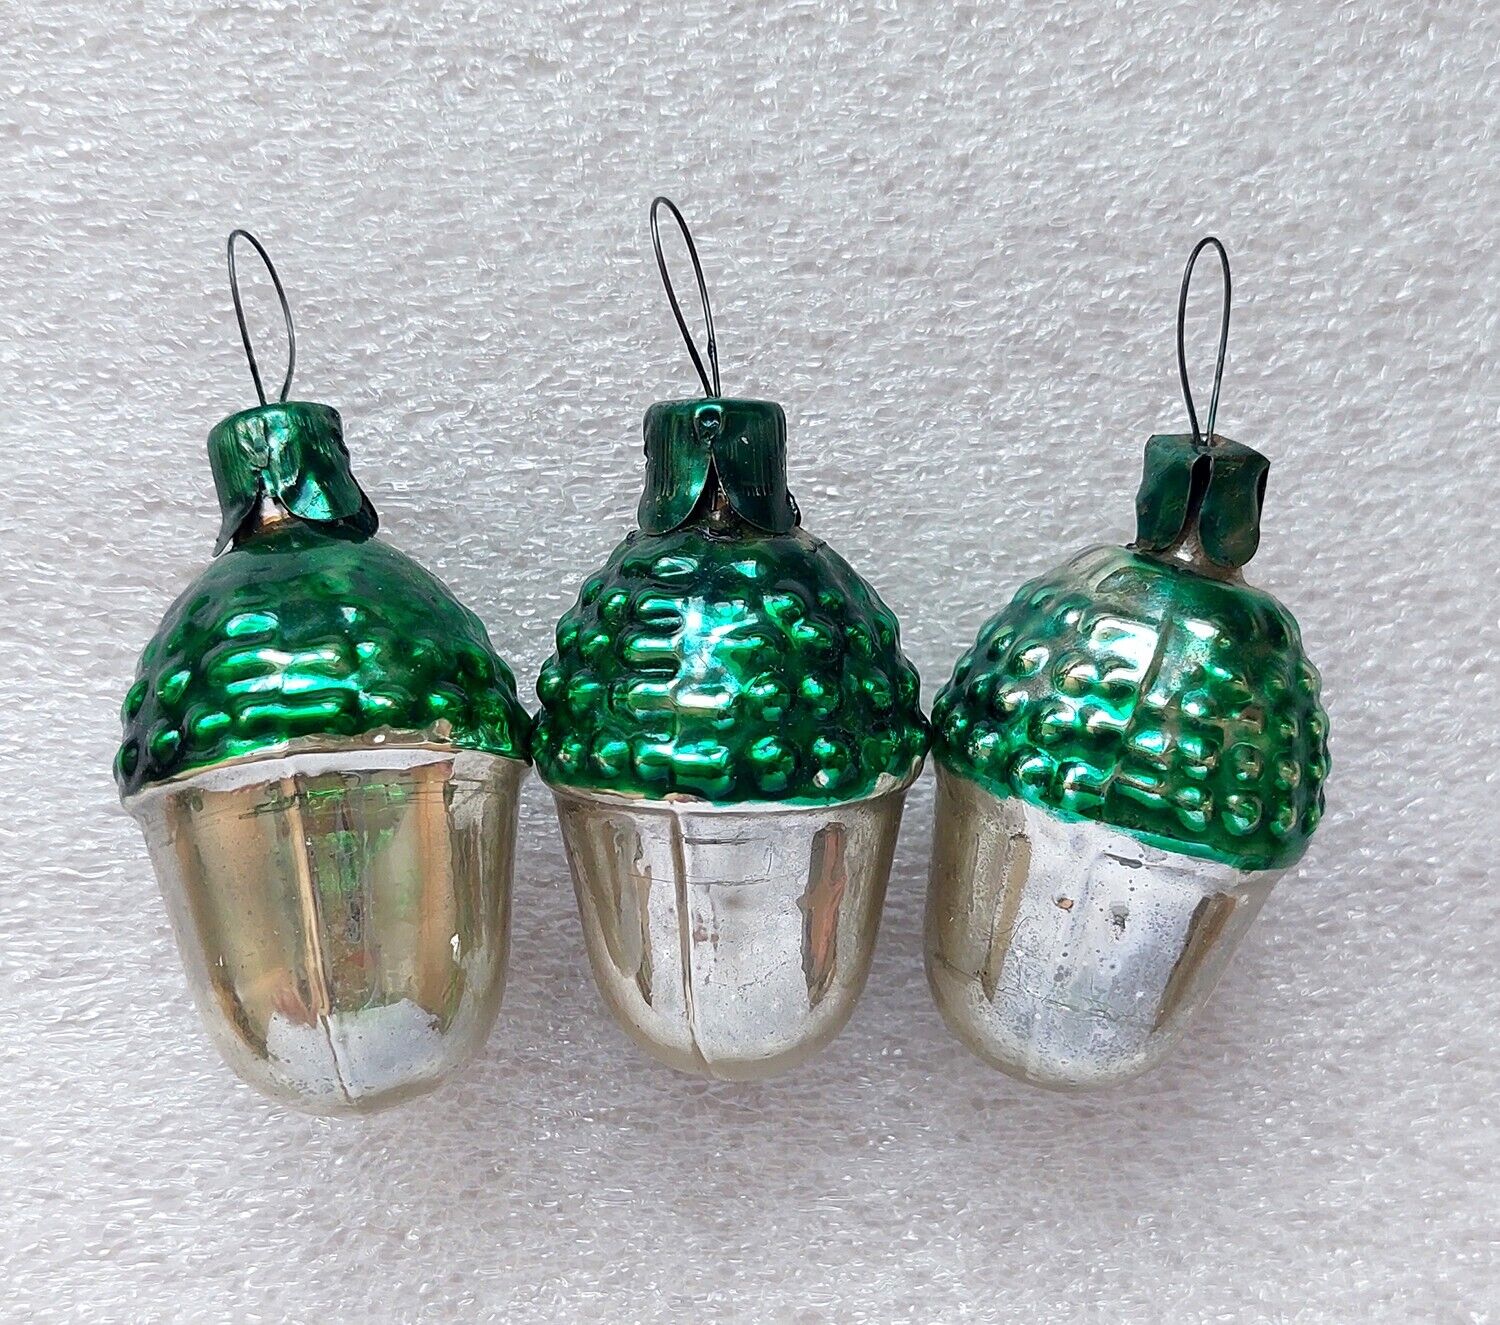 3 Antique Vintage USSR Glass Xmas Christmas Ornaments - Acorns